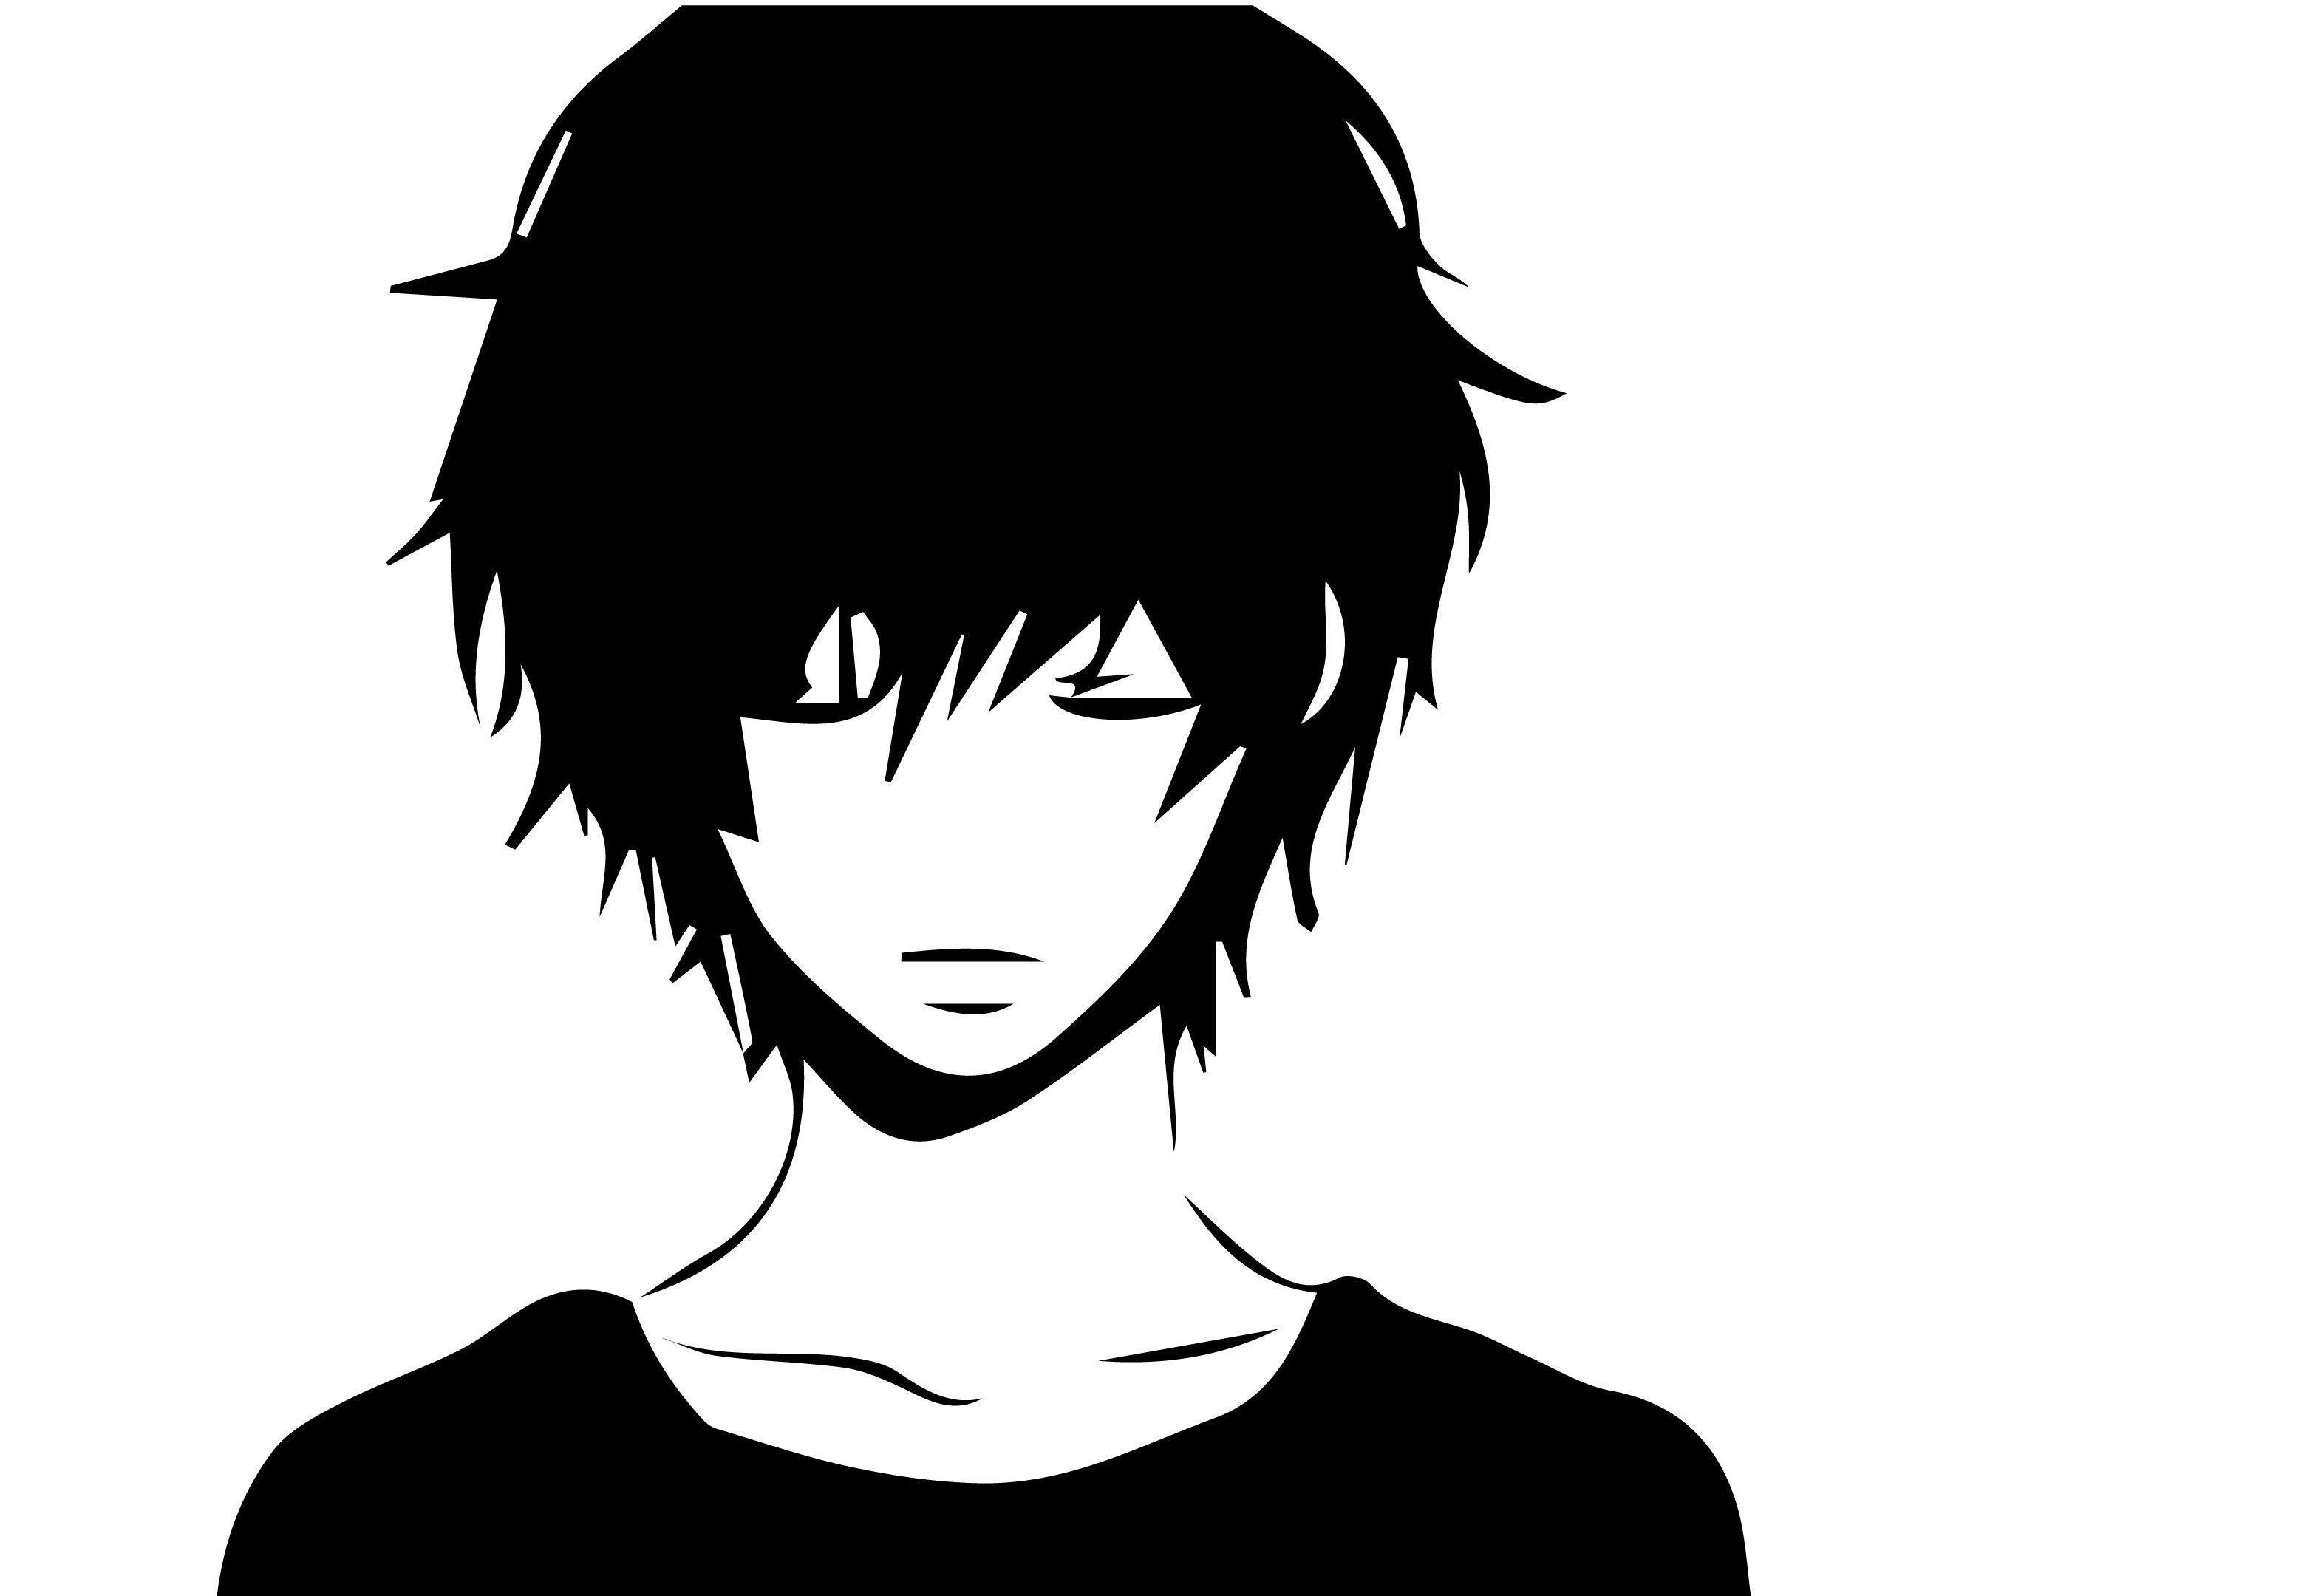 Sad Anime Boy Image. Sad Cartoon Boy Alone Pic